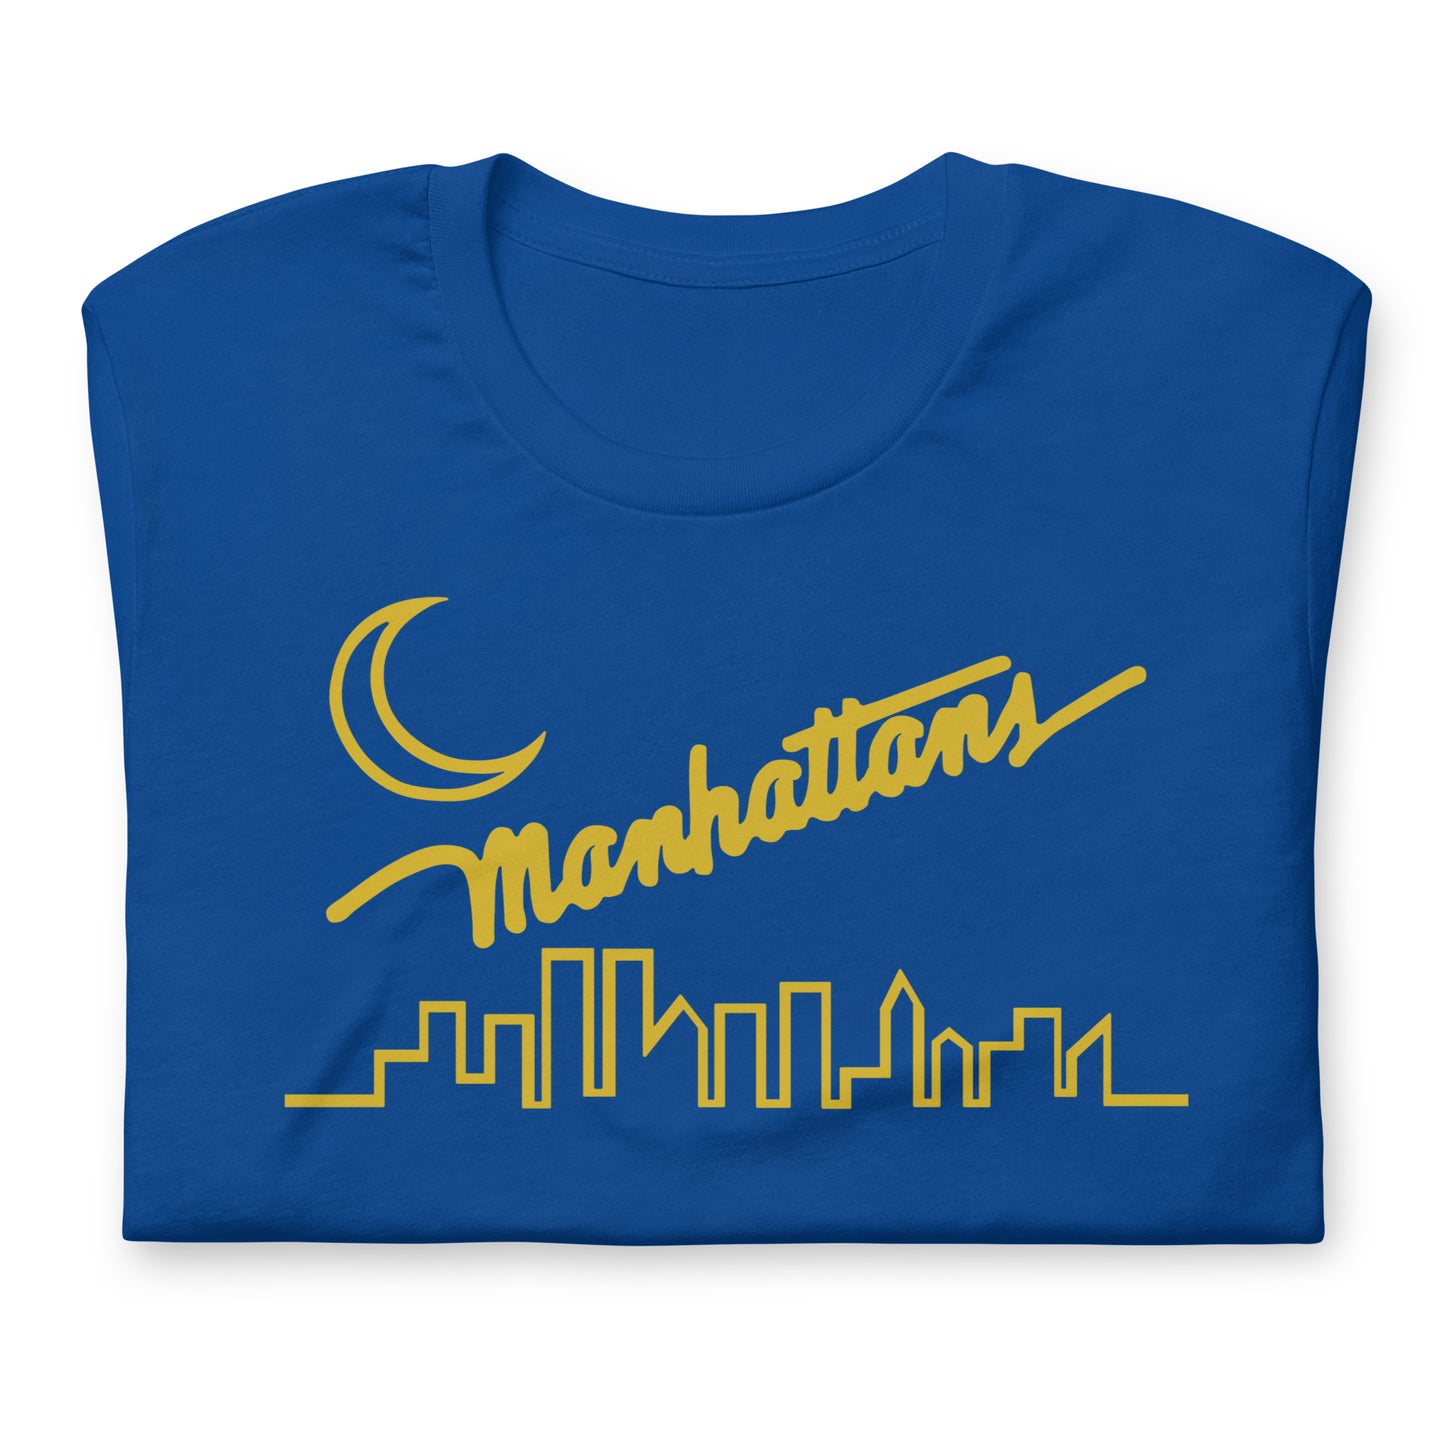 Manhattan's unisex printed t-shirt